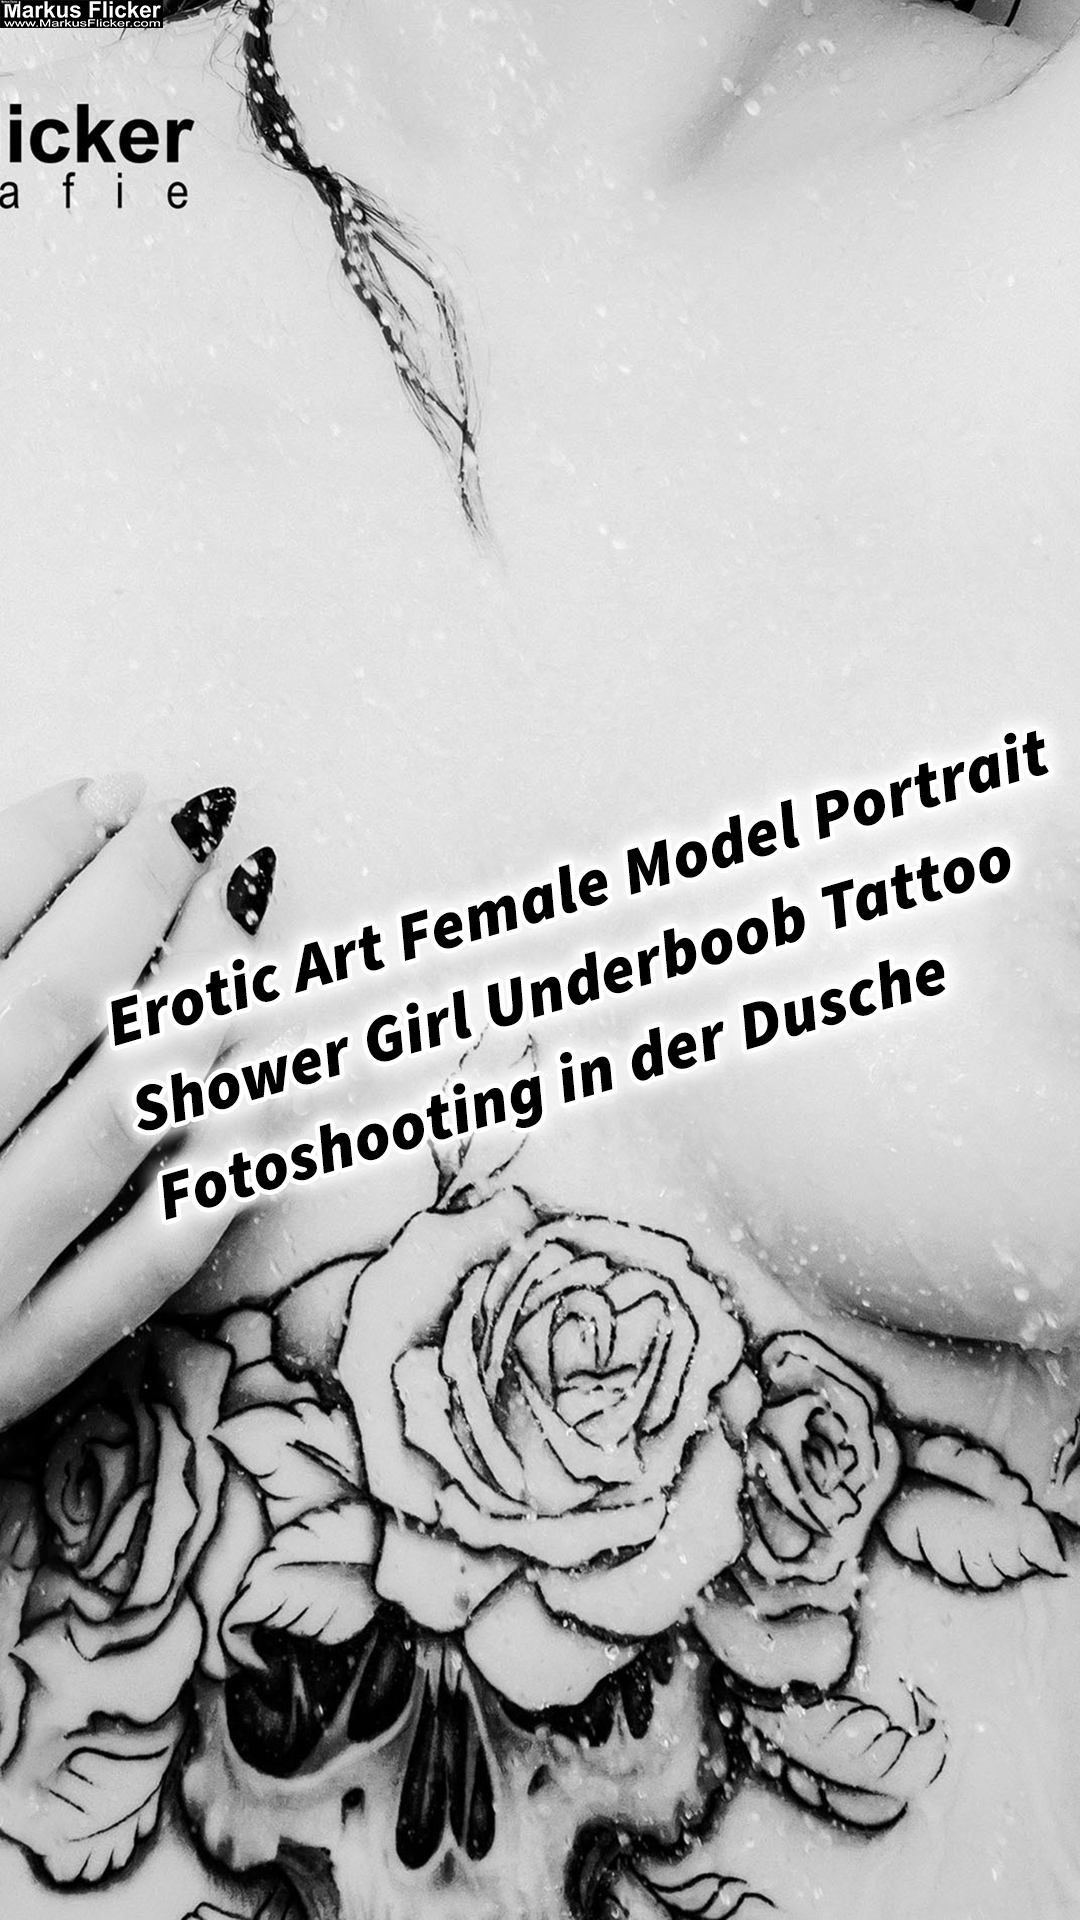 Erotic Art Female Model Portrait Elisa Shower Girl Underboob Tattoo Fotoshooting in der Dusche